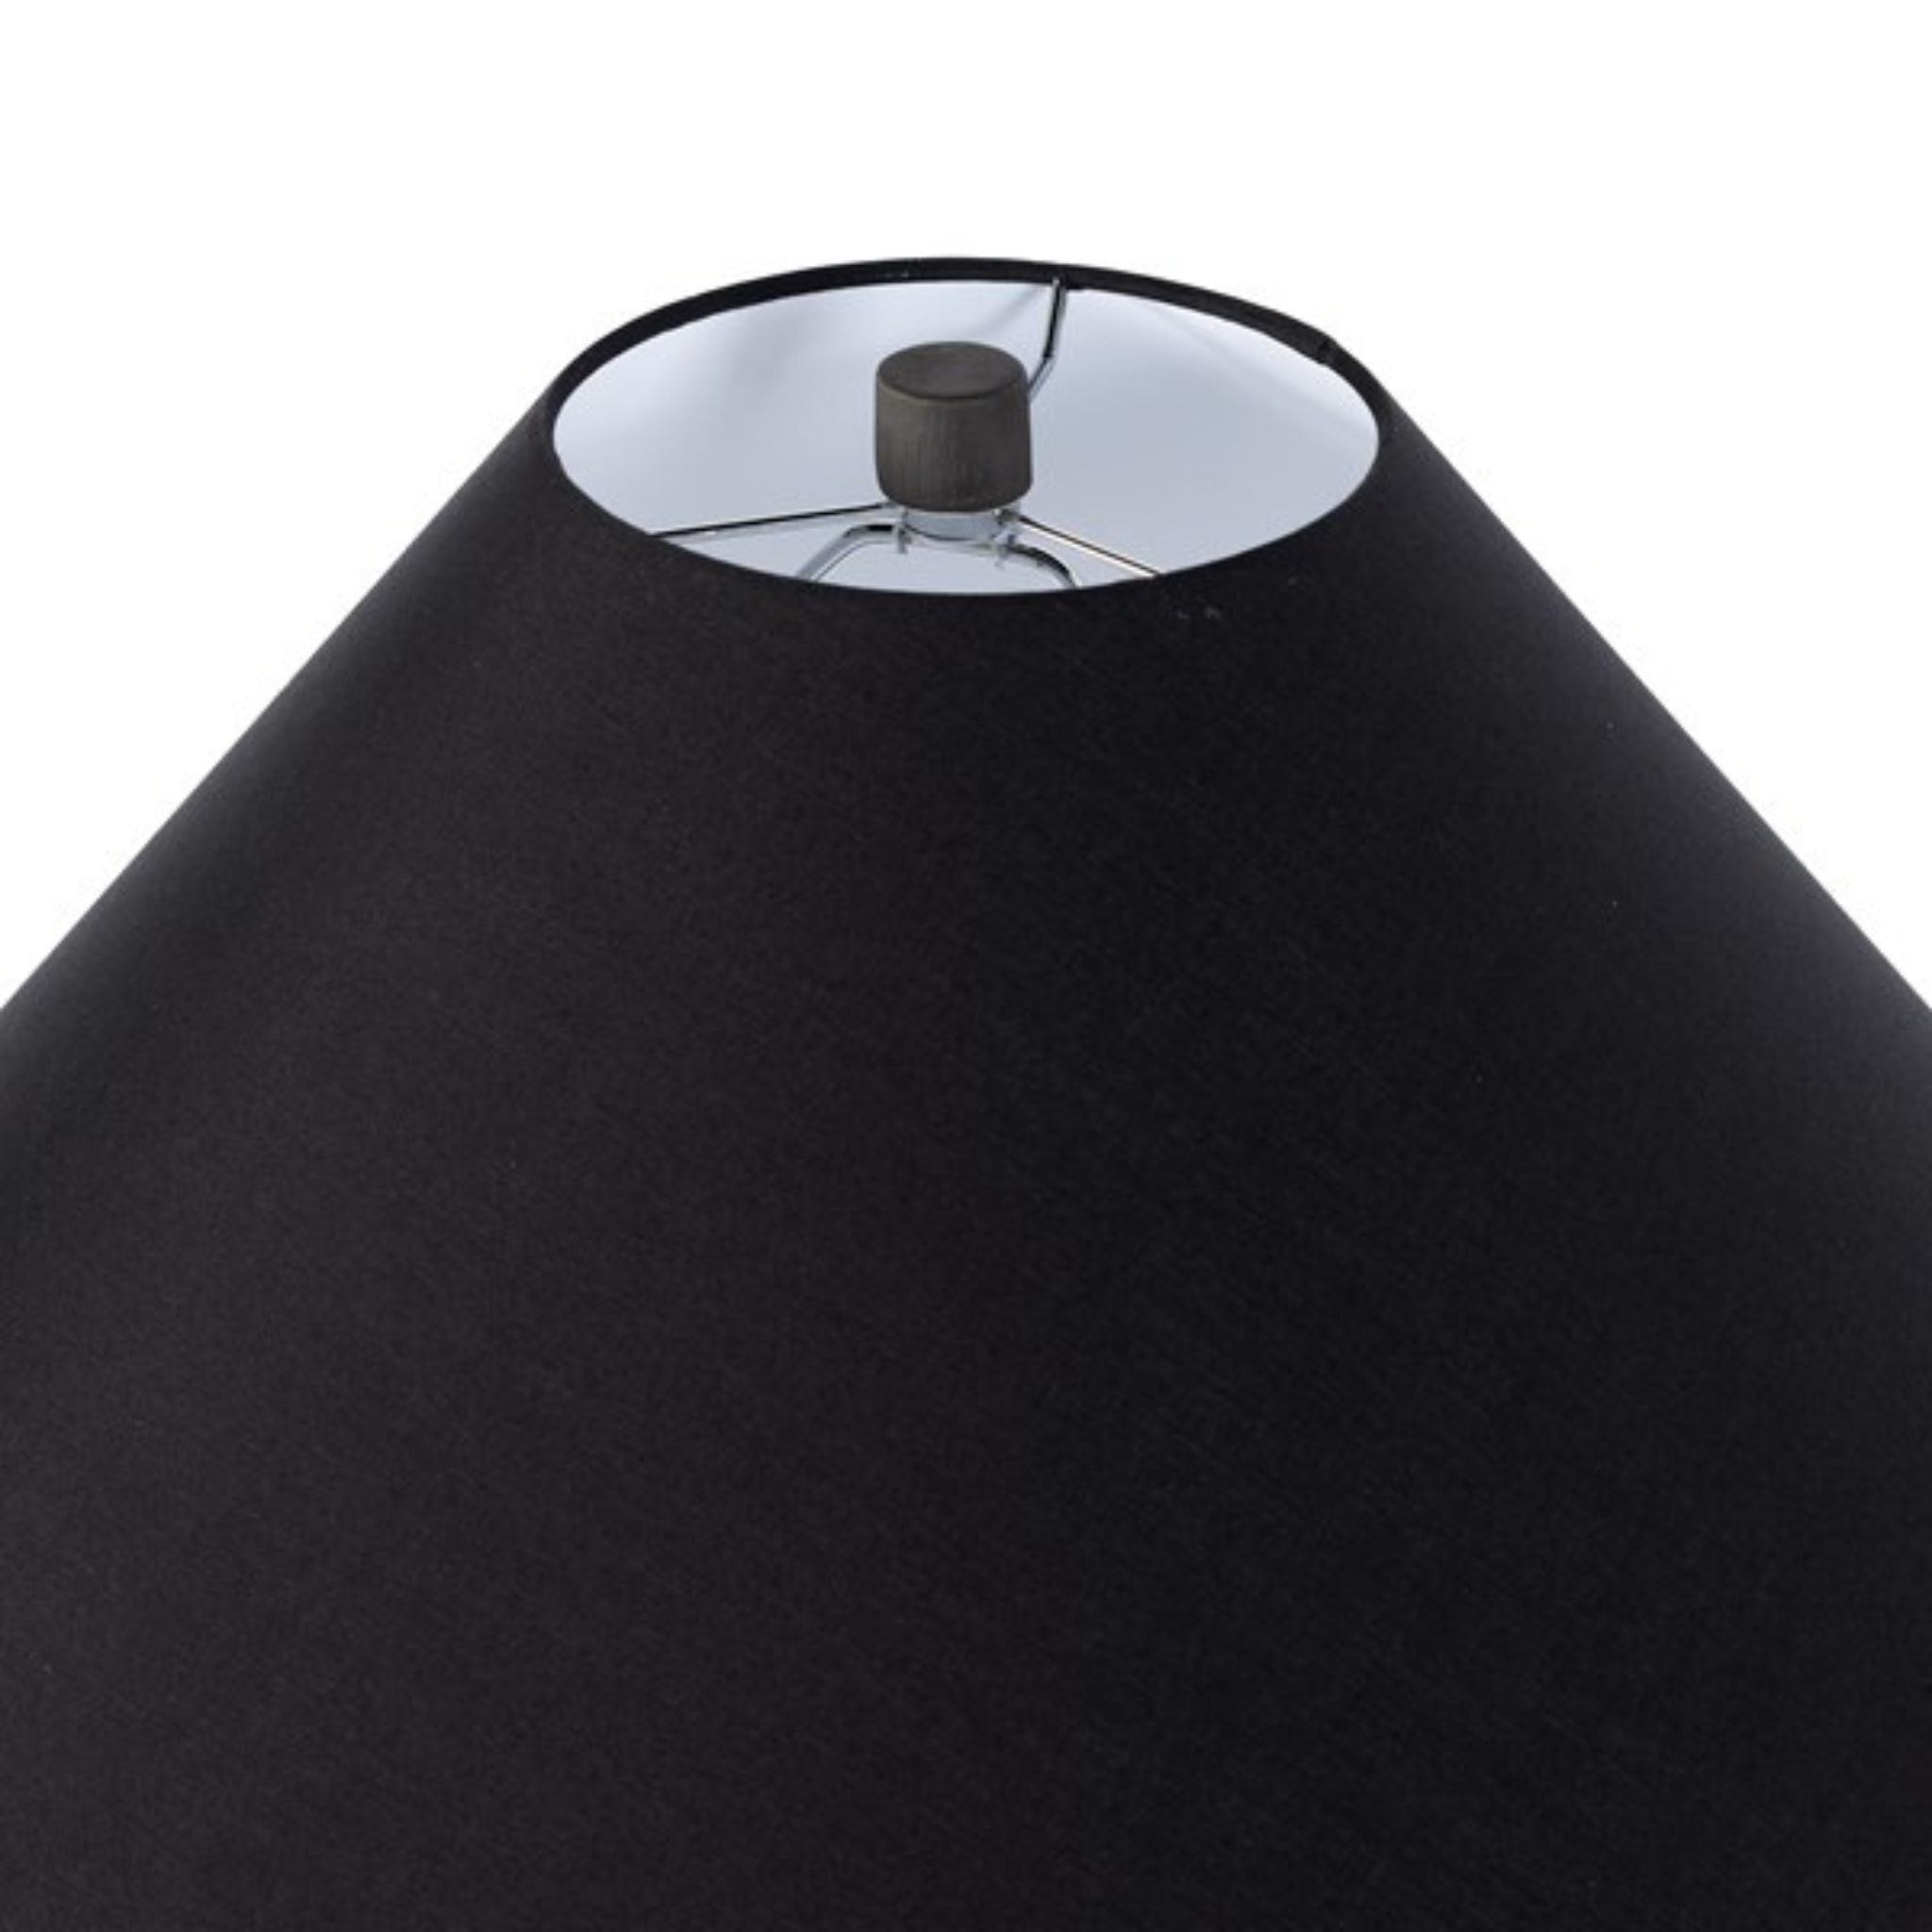 MUJI TABLE LAMP - BLACK SHADE